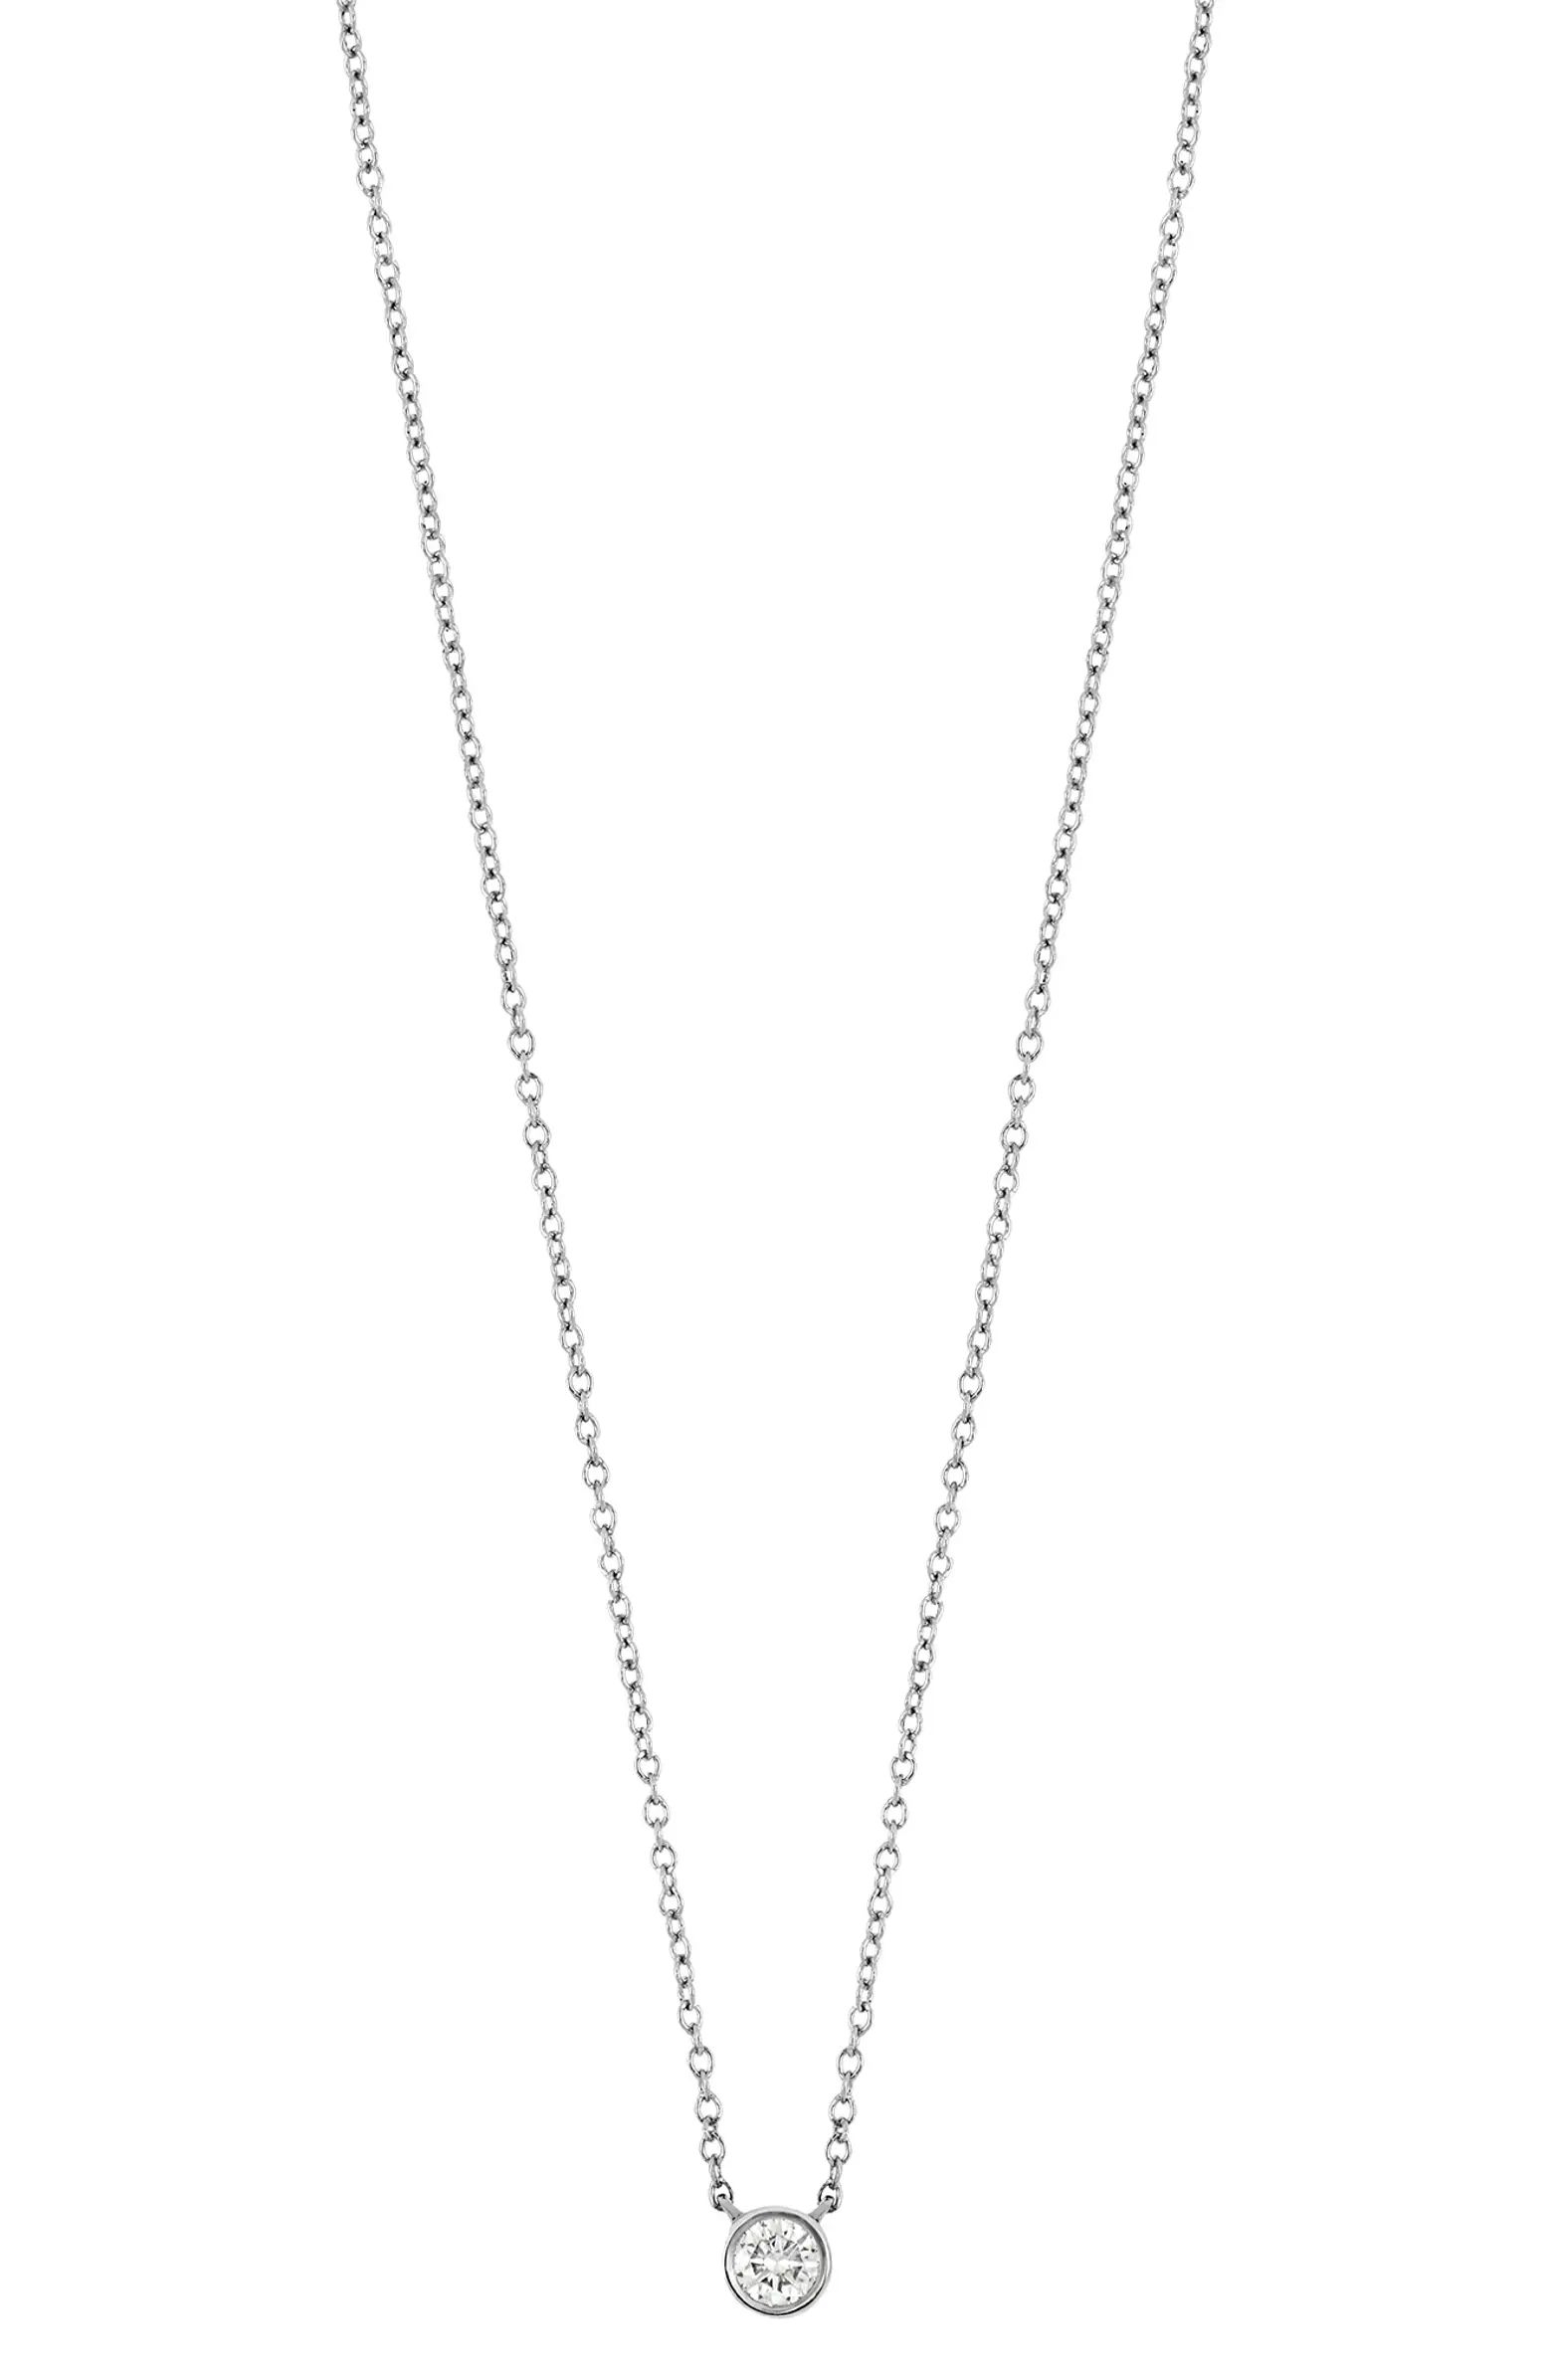 14K Gold Bezel Set Diamond Solitaire Lightweight Chain Necklace - 0.10 ctw | Nordstrom Rack